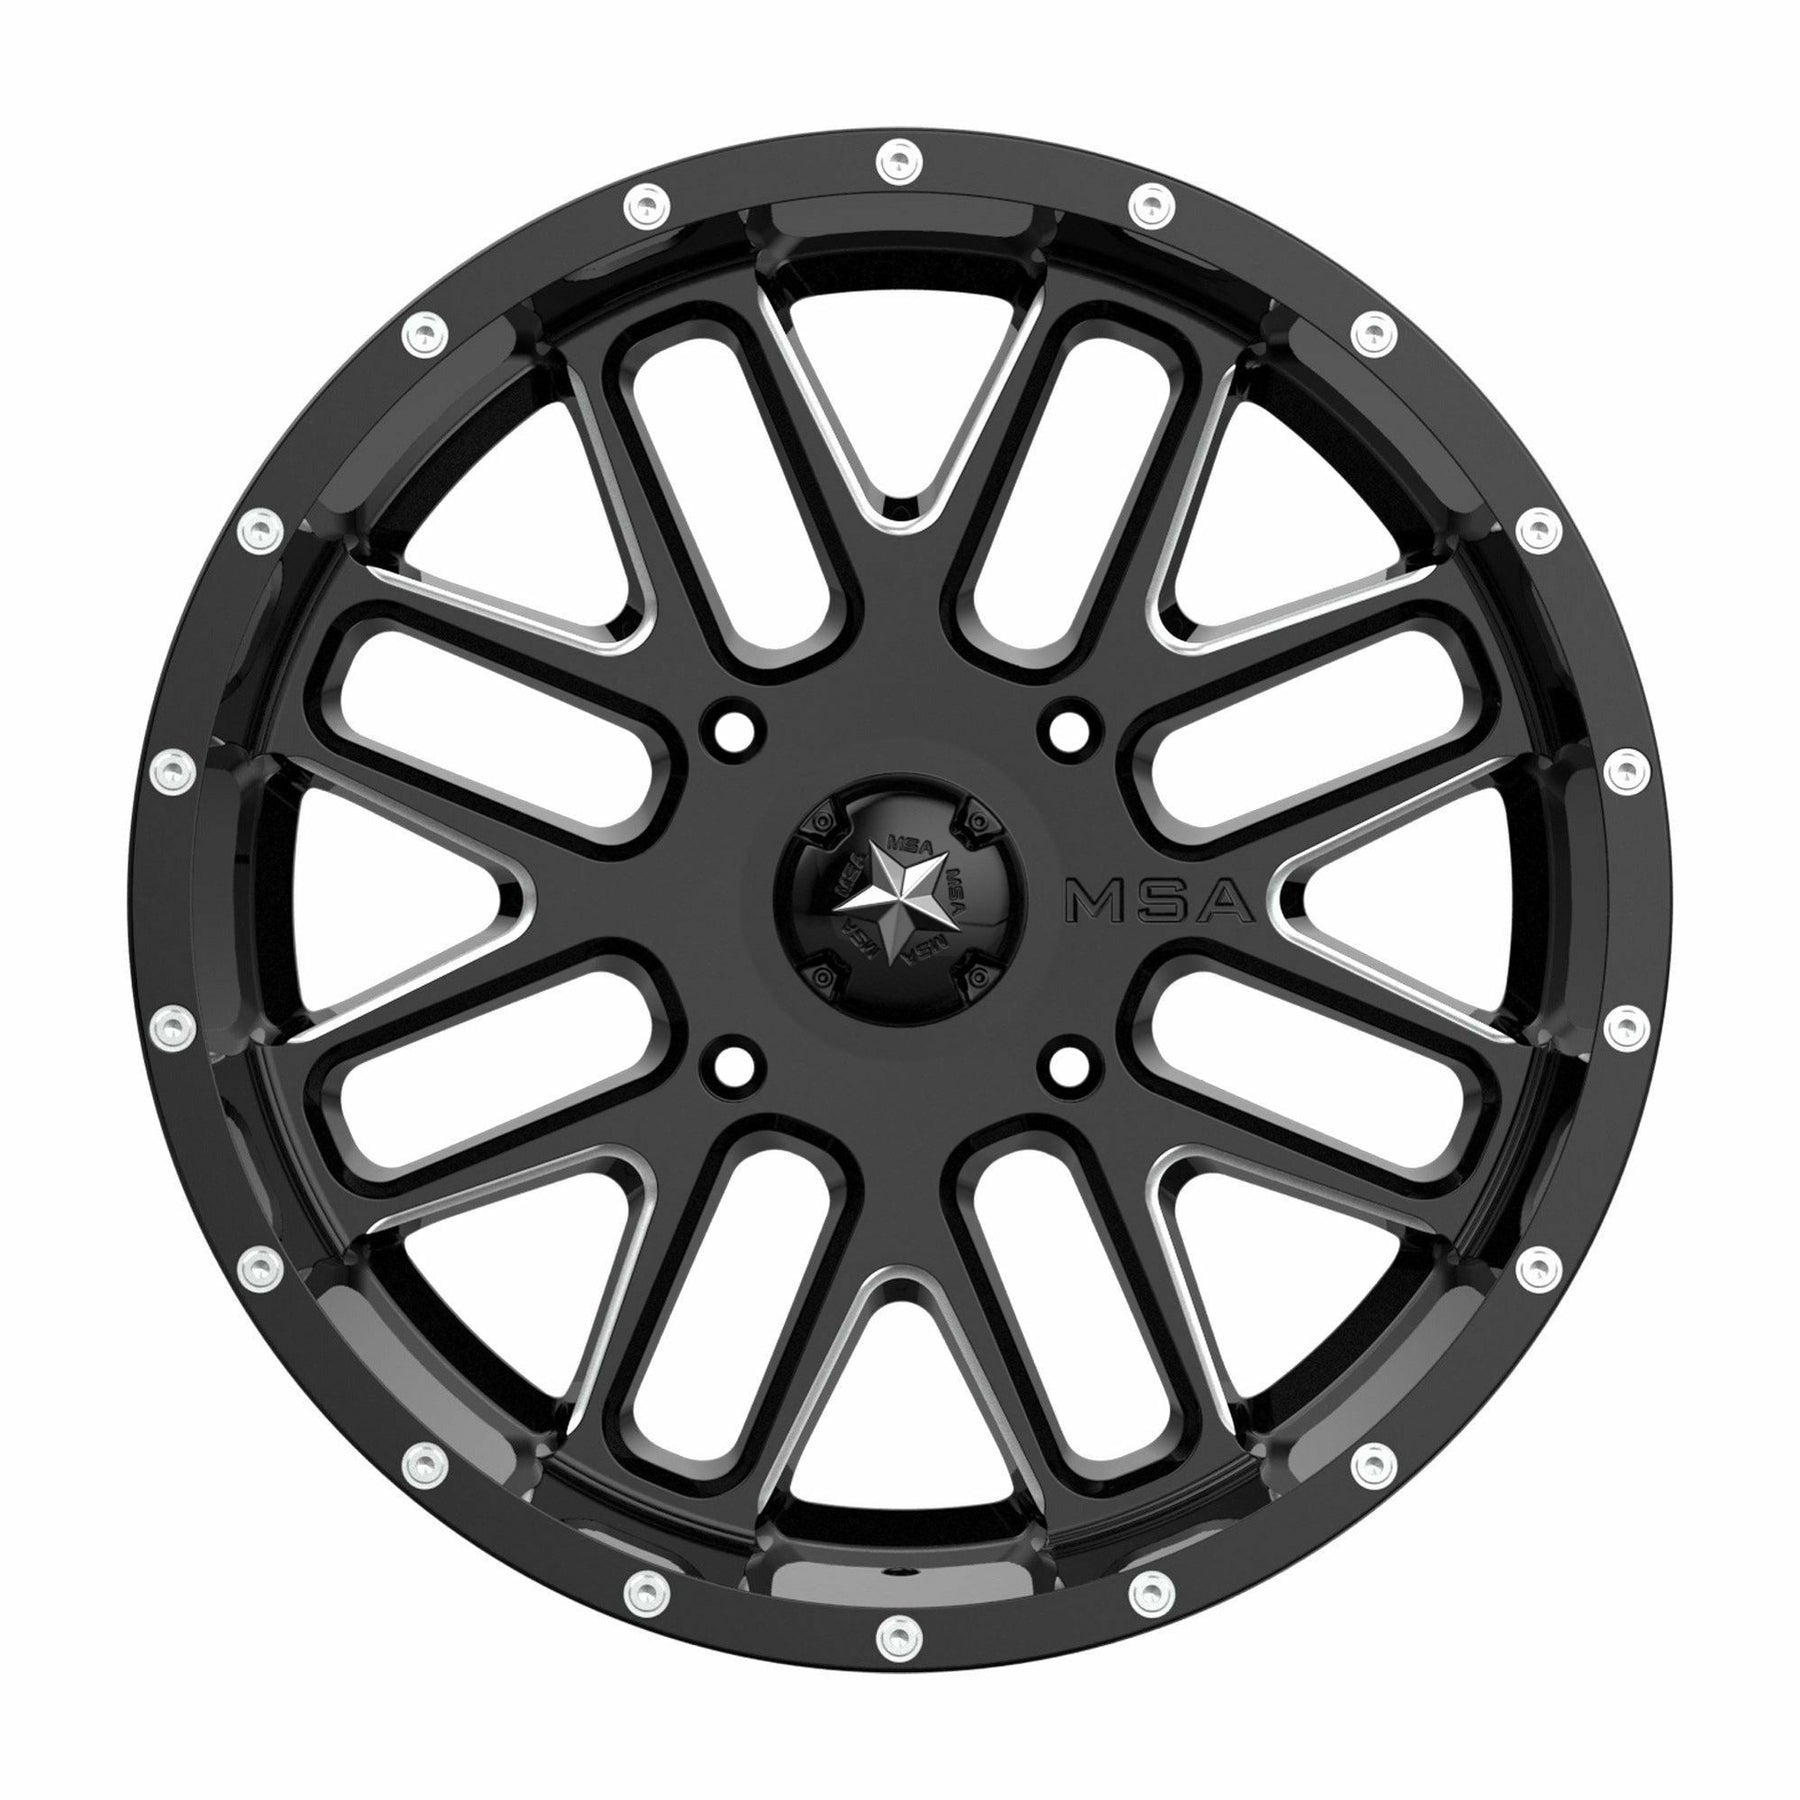 MSA Wheels M35 Bandit Wheel (Gloss Black Milled)